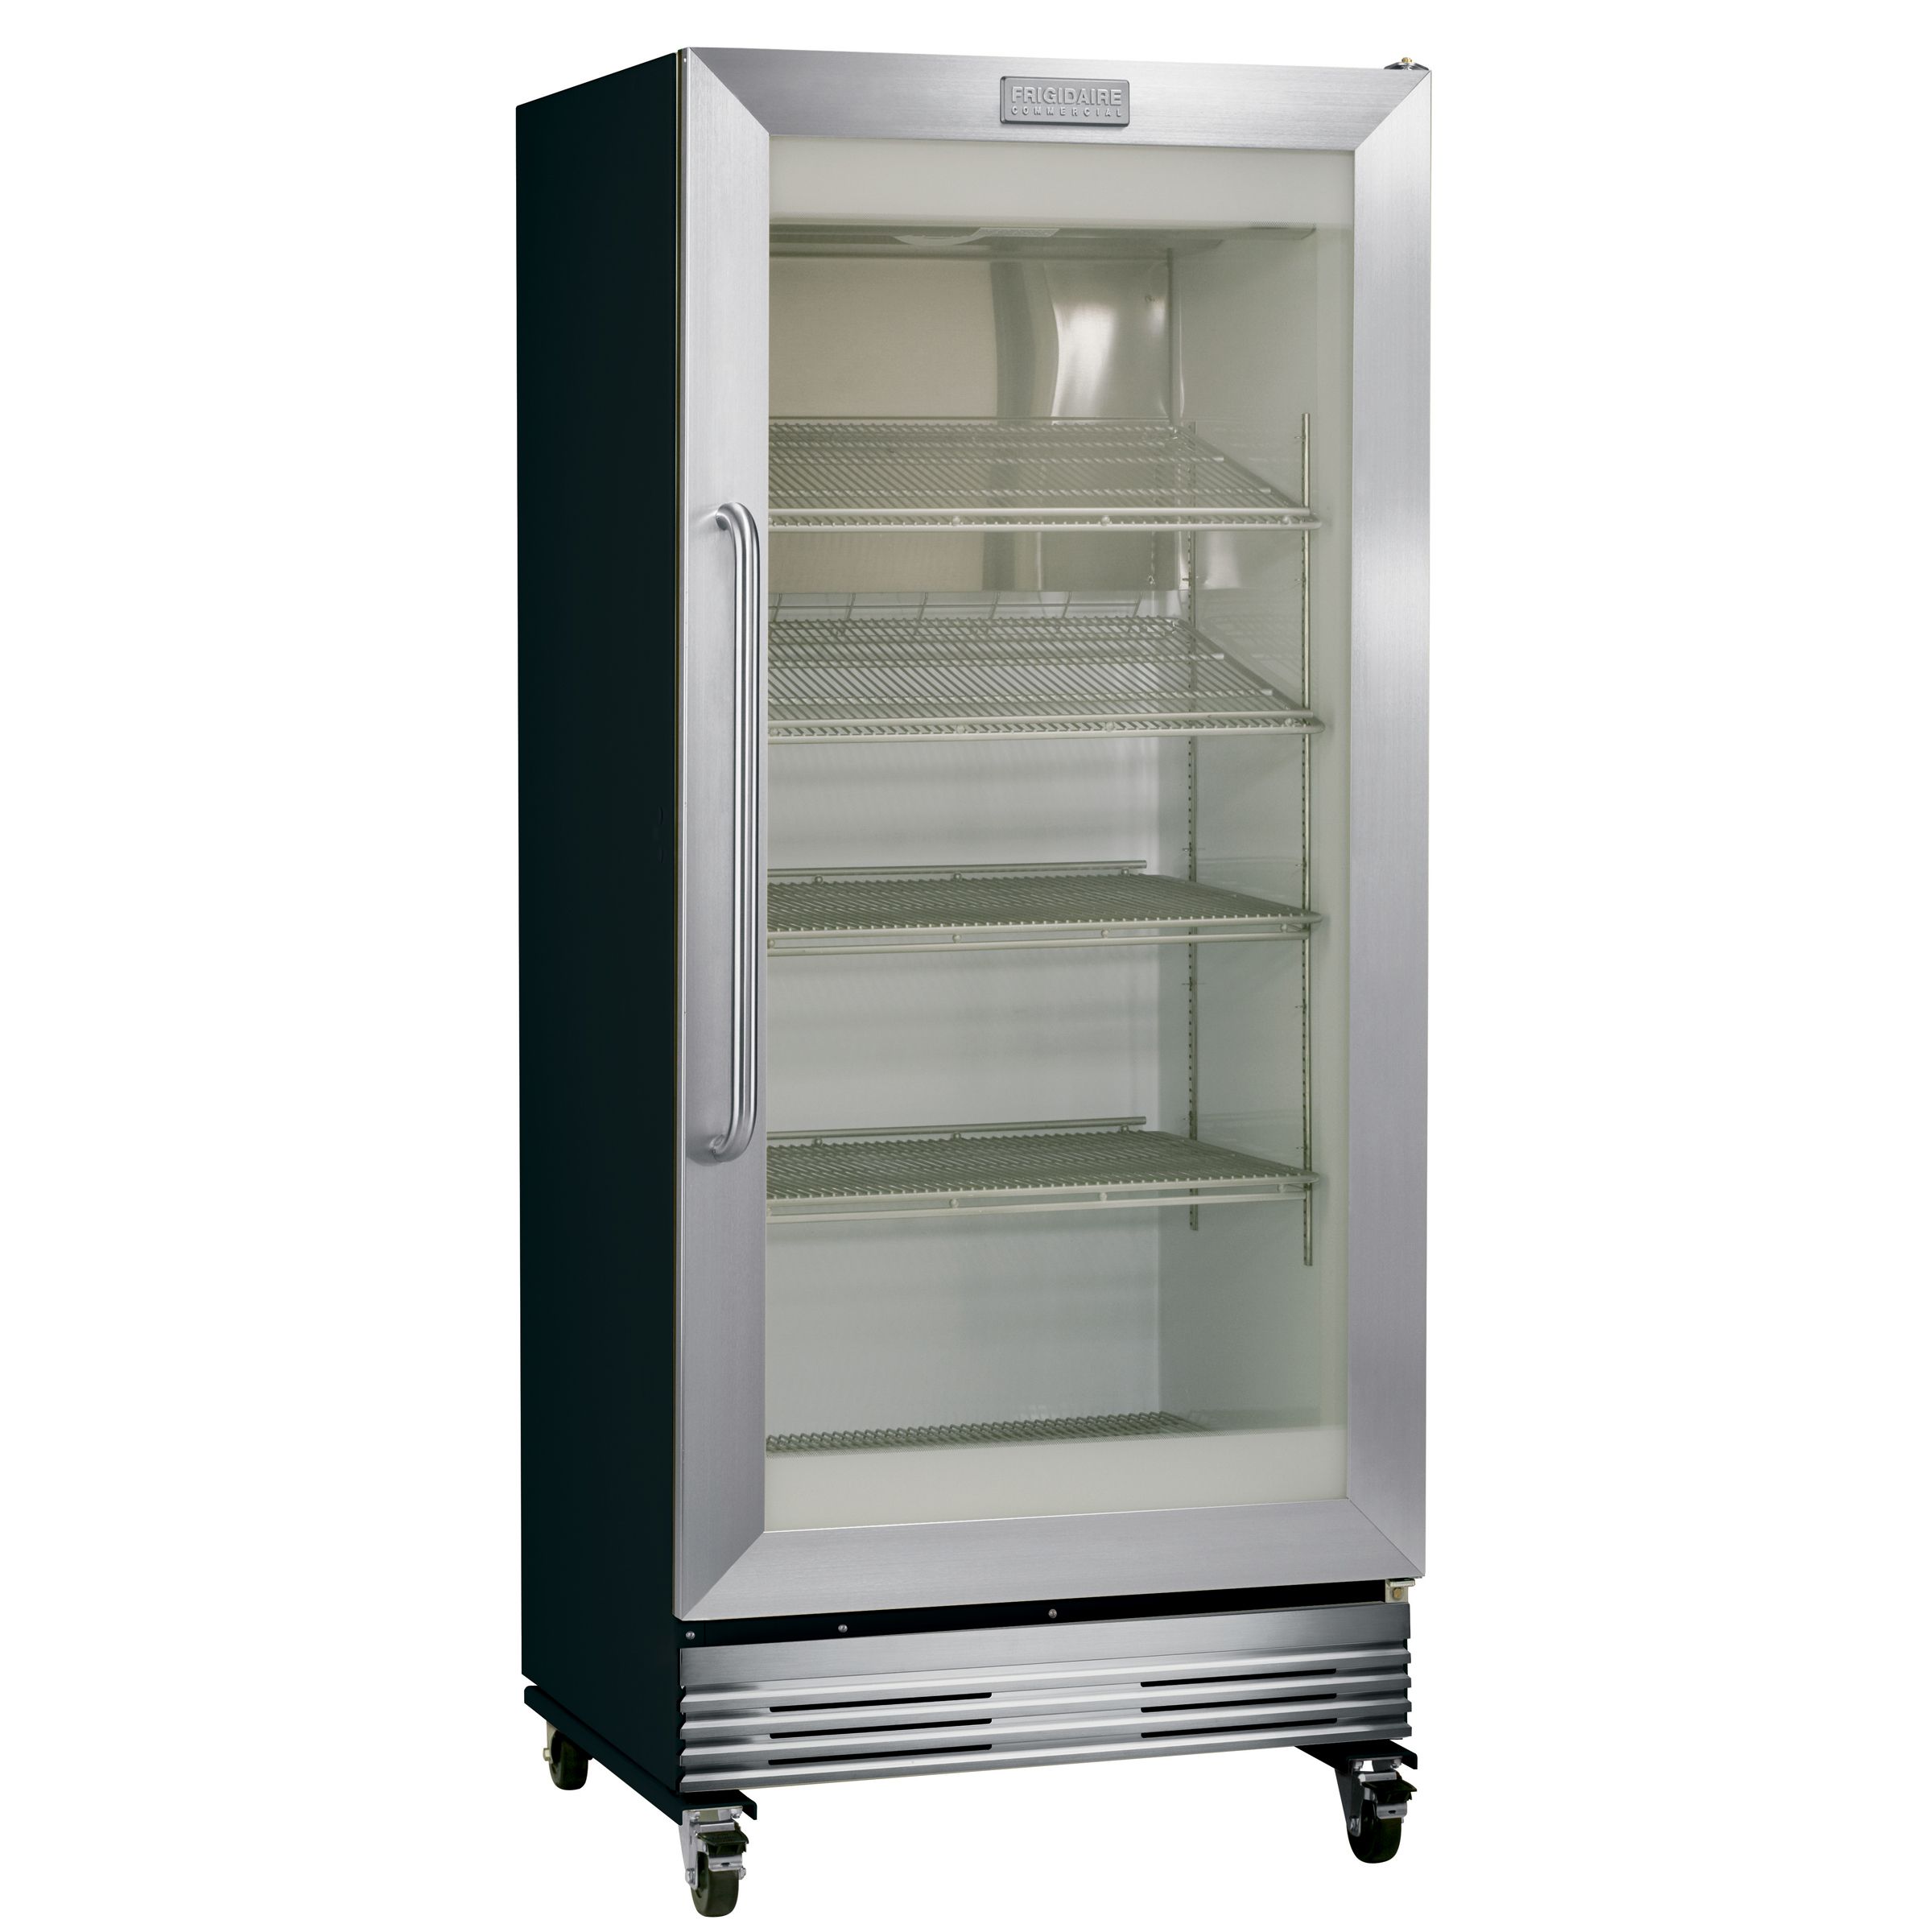 Frigidaire 19.53 cu. ft. Refrigerator Stainless steel